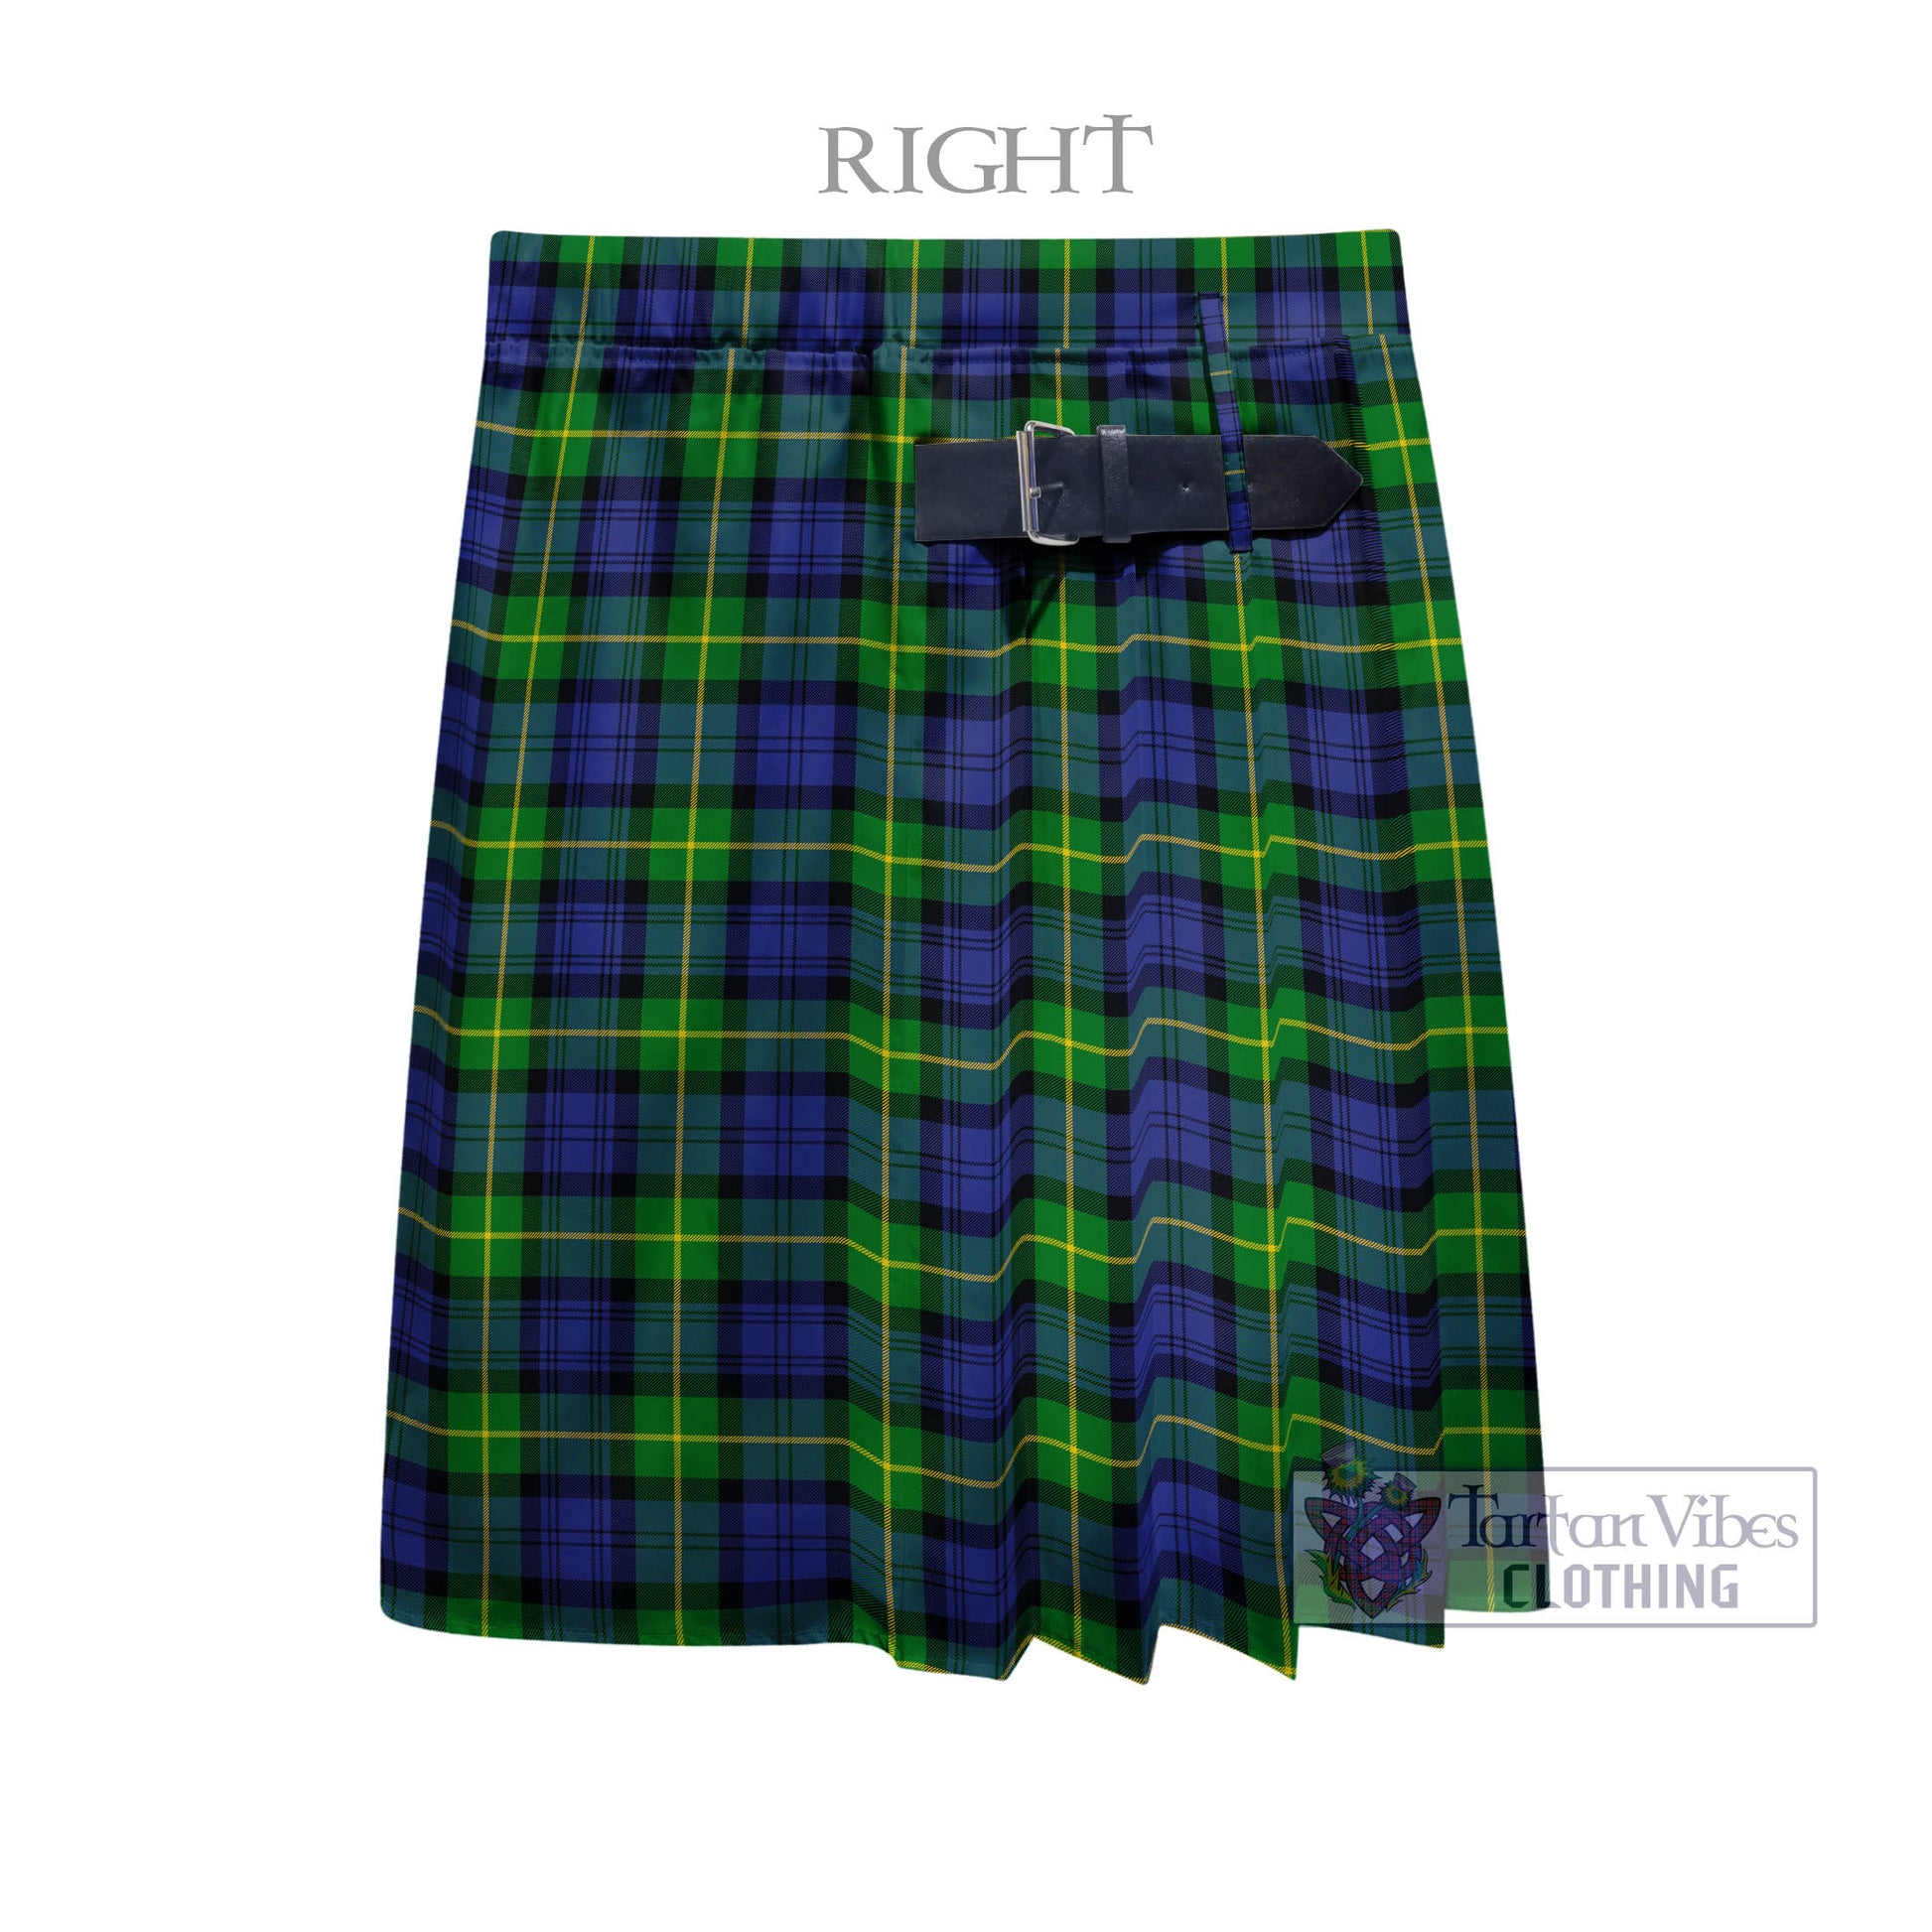 Tartan Vibes Clothing Meldrum Tartan Men's Pleated Skirt - Fashion Casual Retro Scottish Style